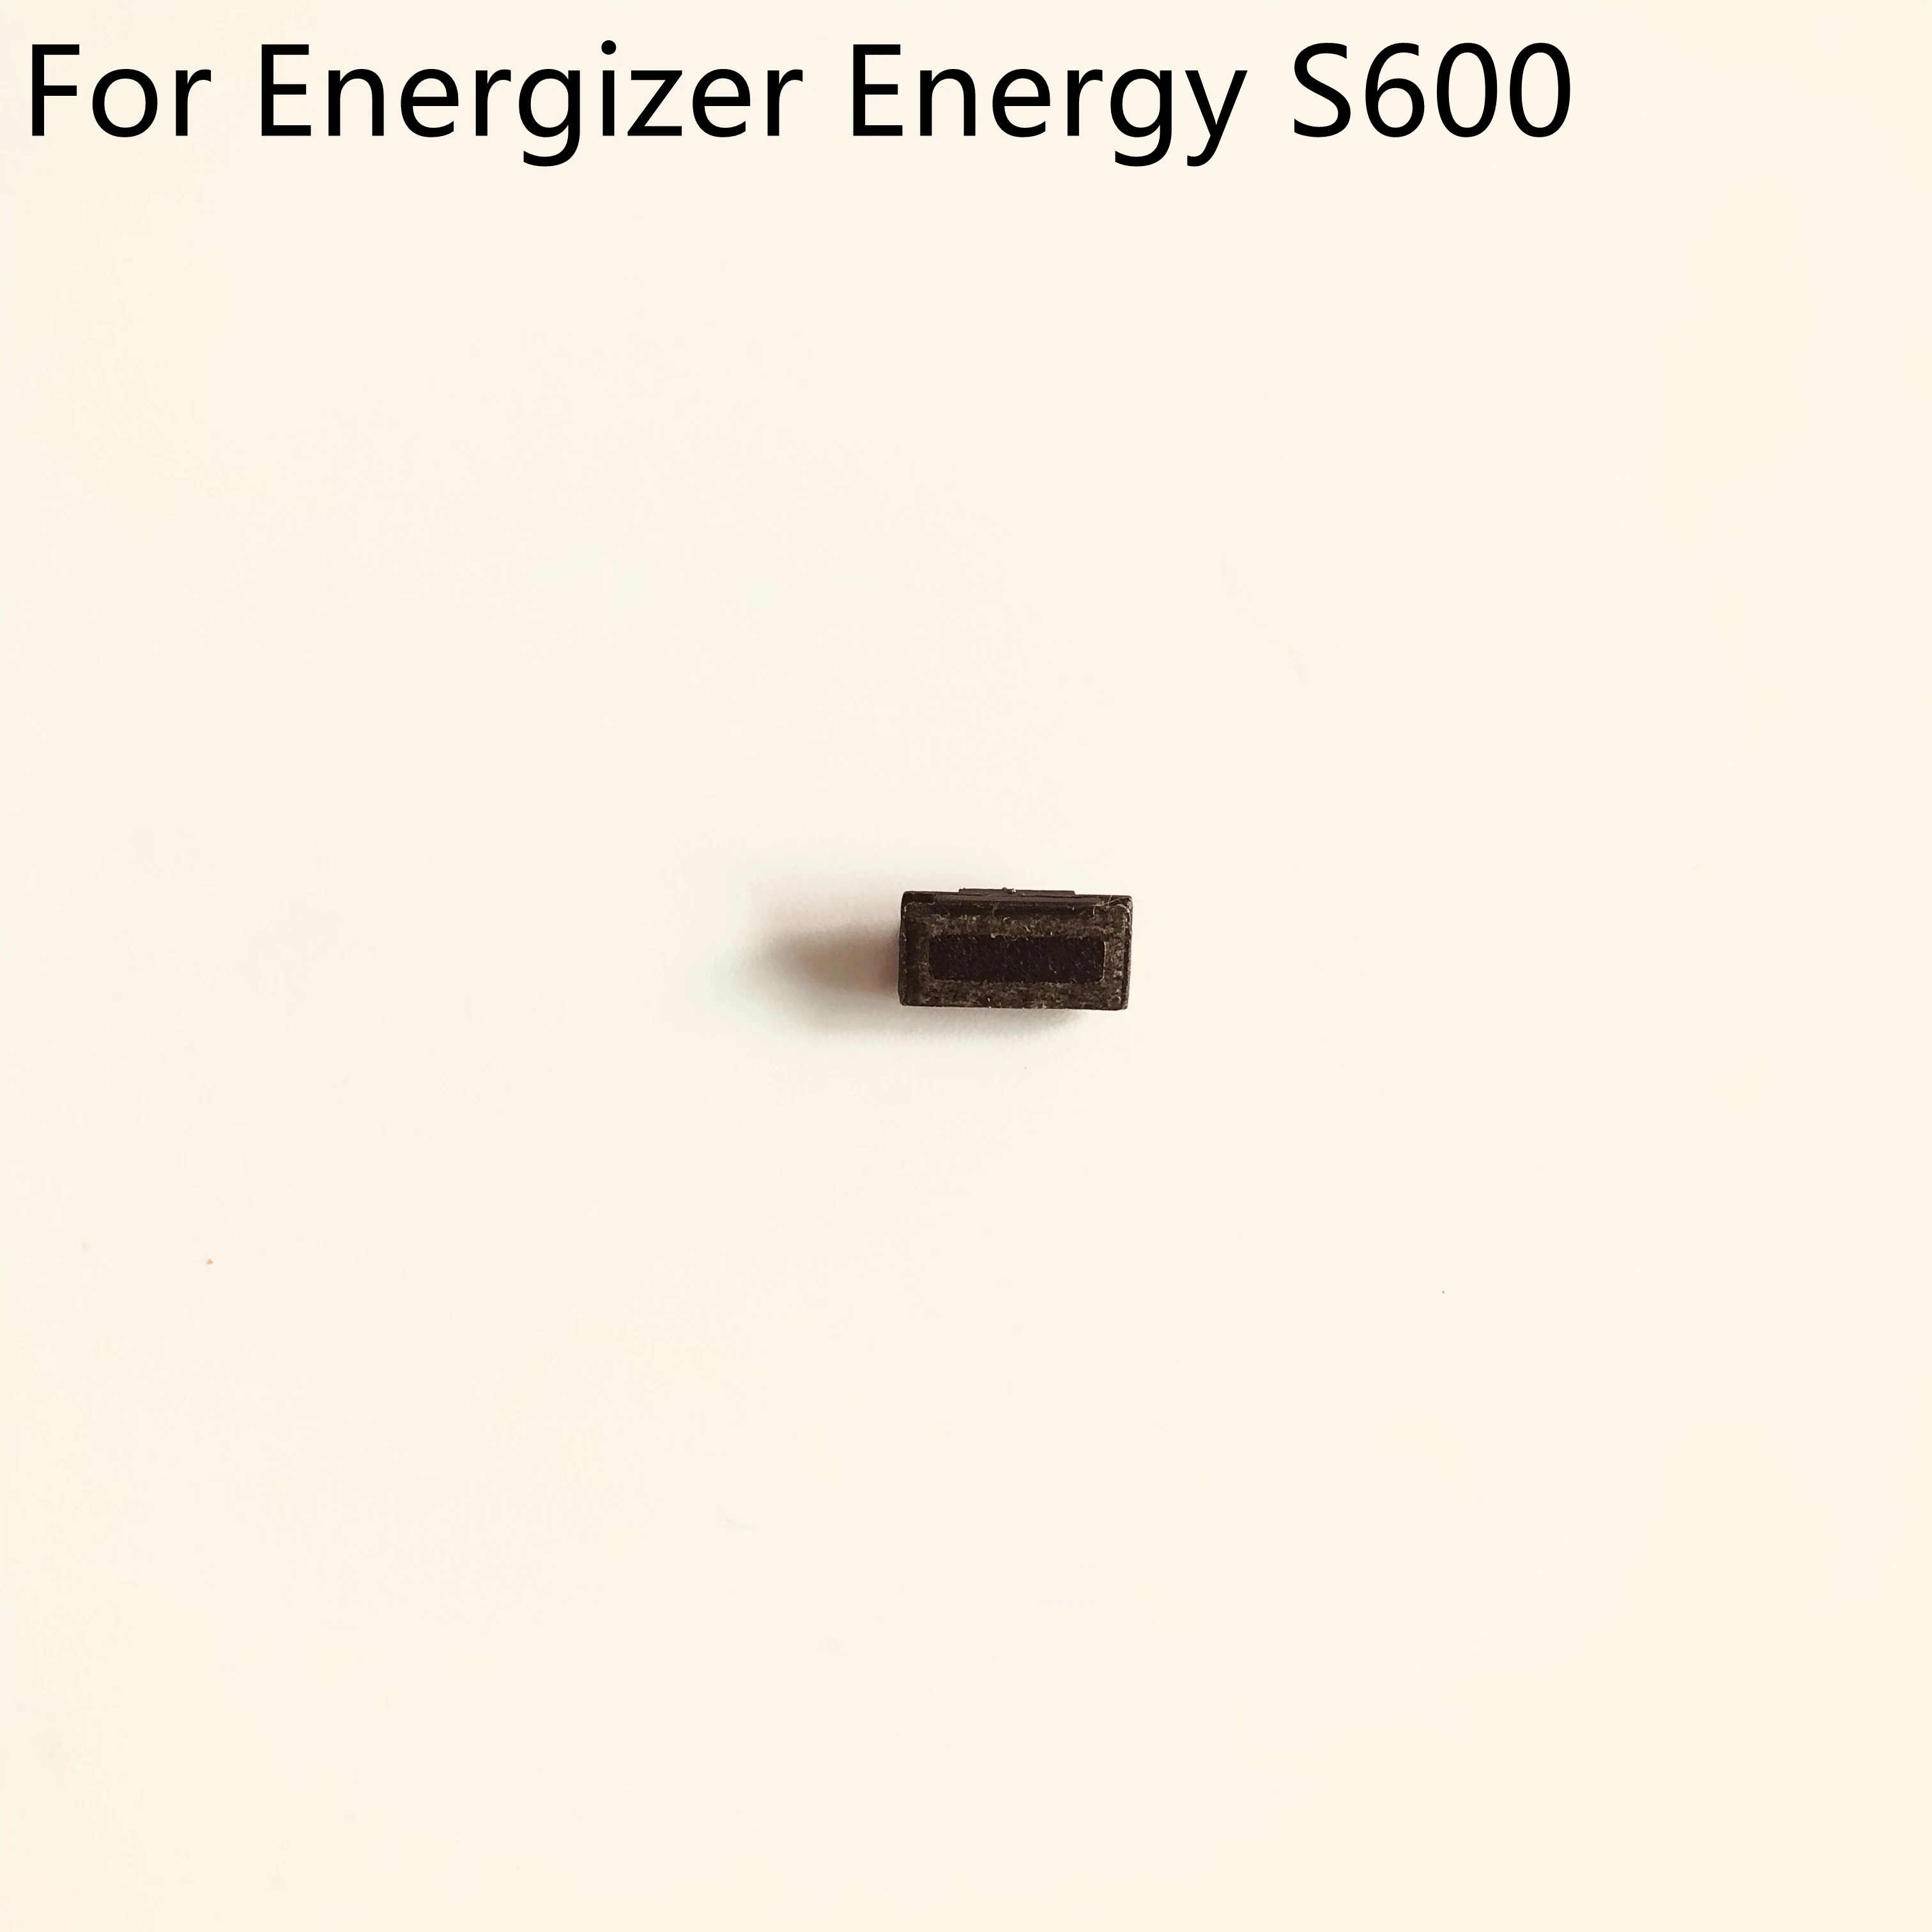 

Energy S600 Voice Receiver Earpiece Ear Speaker For Energy S600 MT6737 6.0" 1280*720 Smartphone